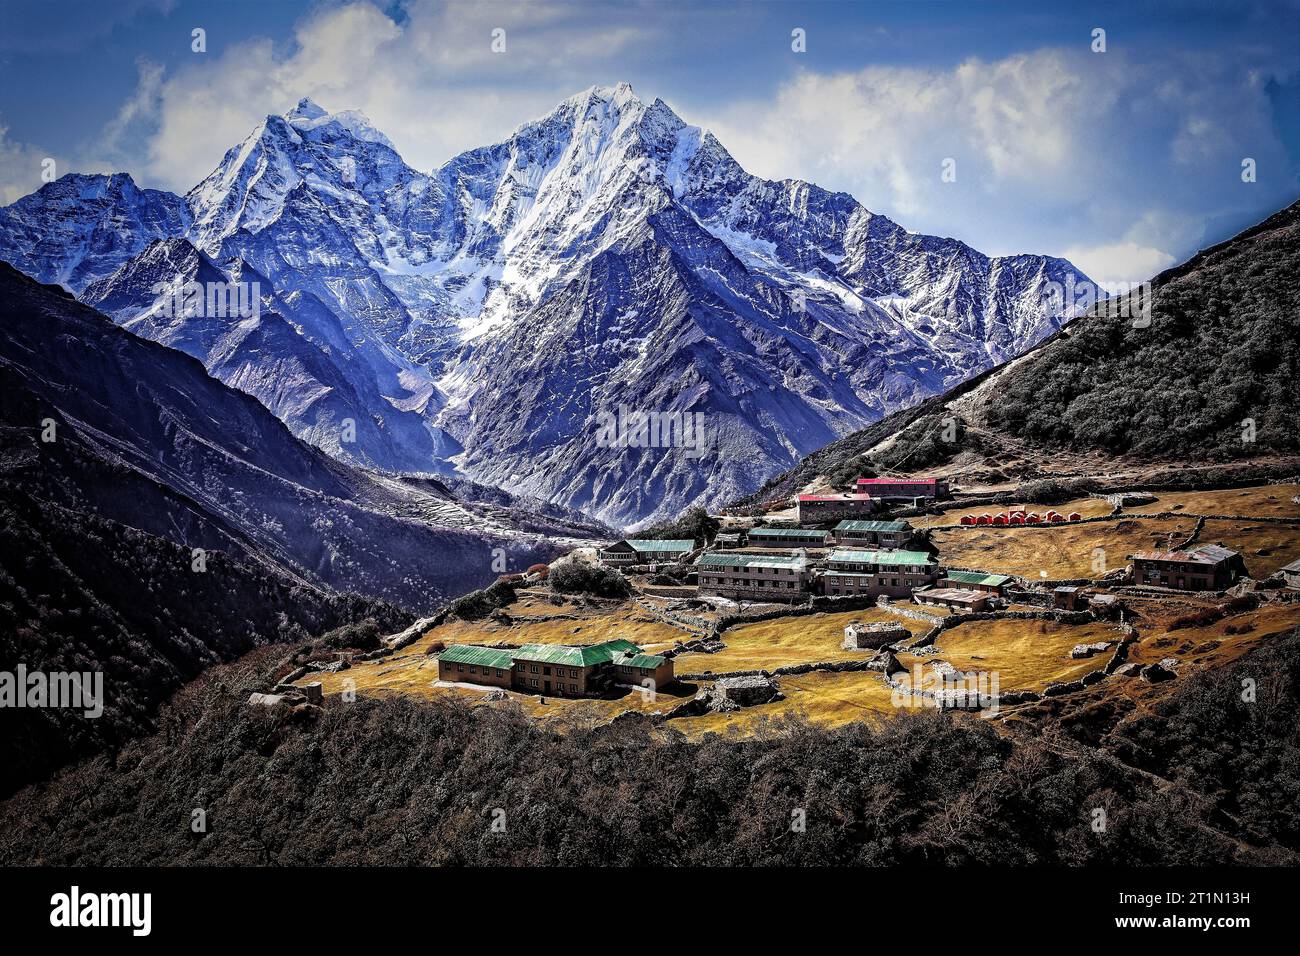 The village of Dhole backed by Himalayan snow capped Kangtega  and Thamserku in the Khumbu region of Sagarmatha National Park, Nepal. Stock Photo